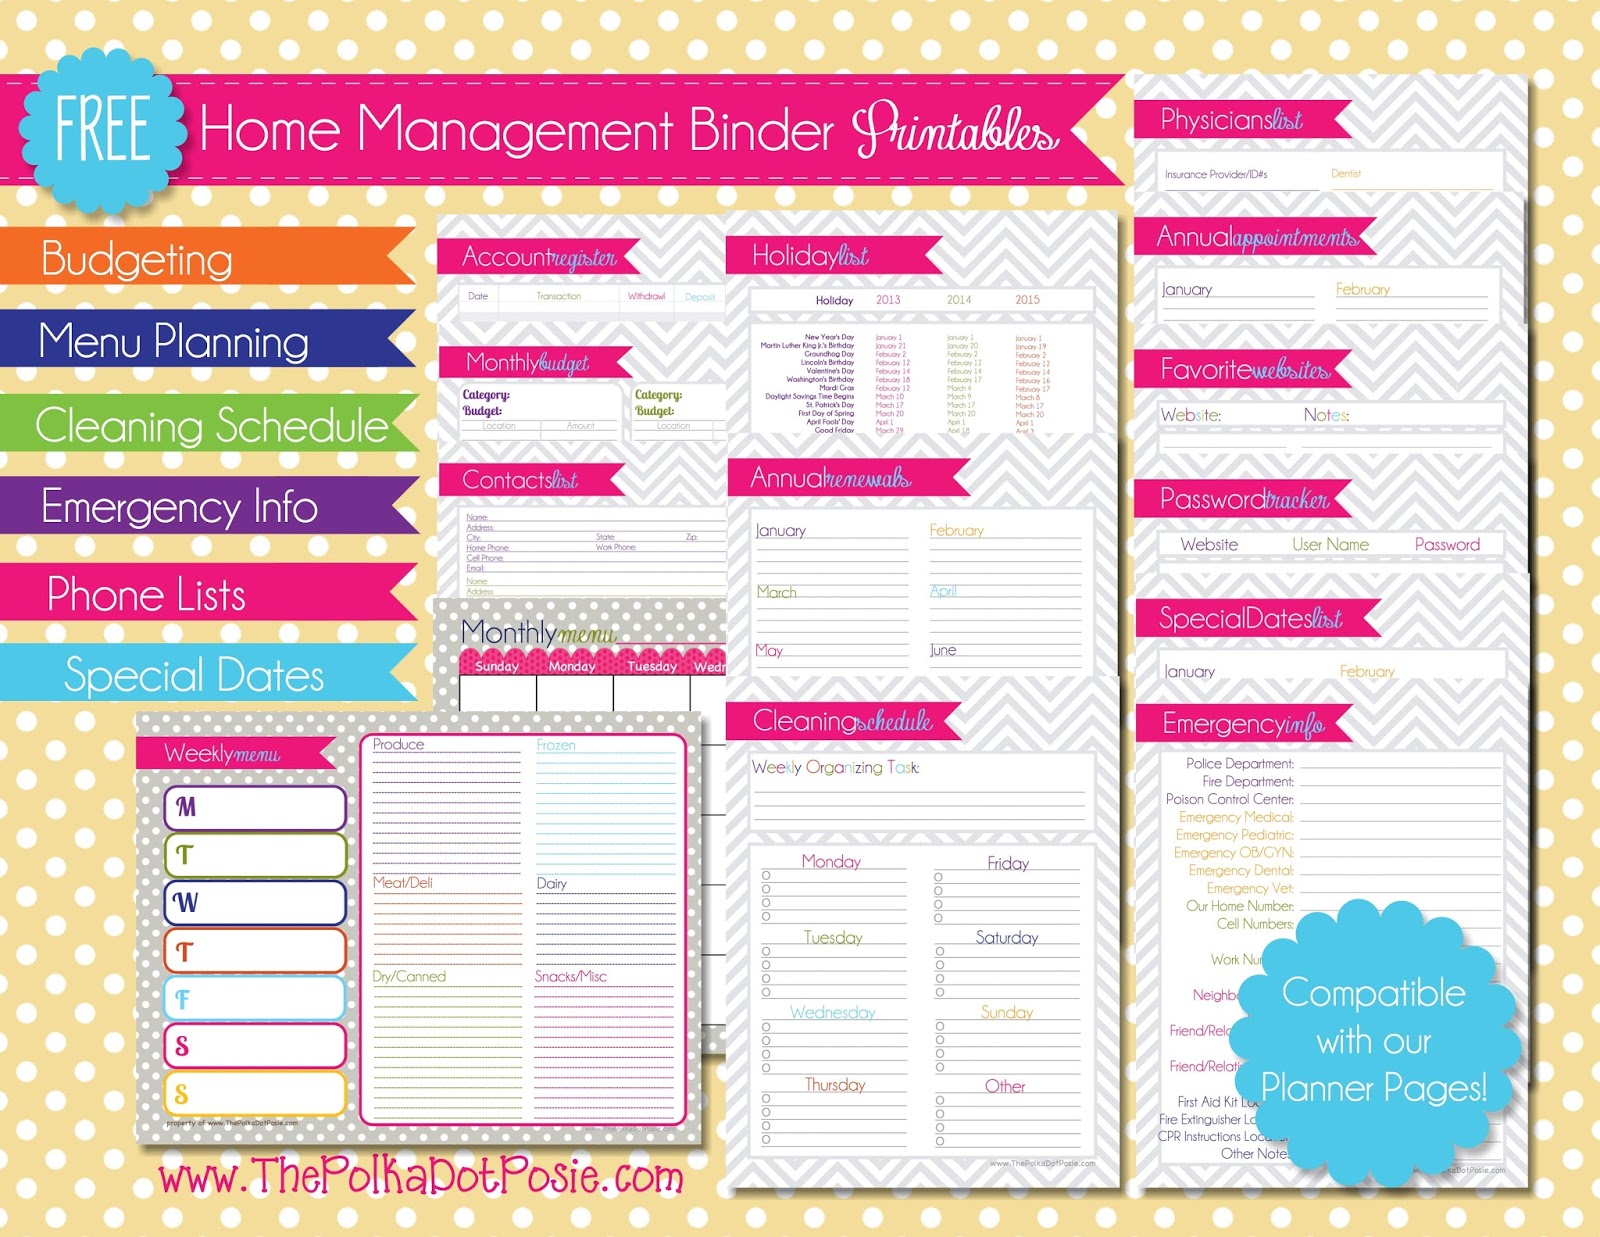 8-best-images-of-home-management-binder-printables-password-sheet